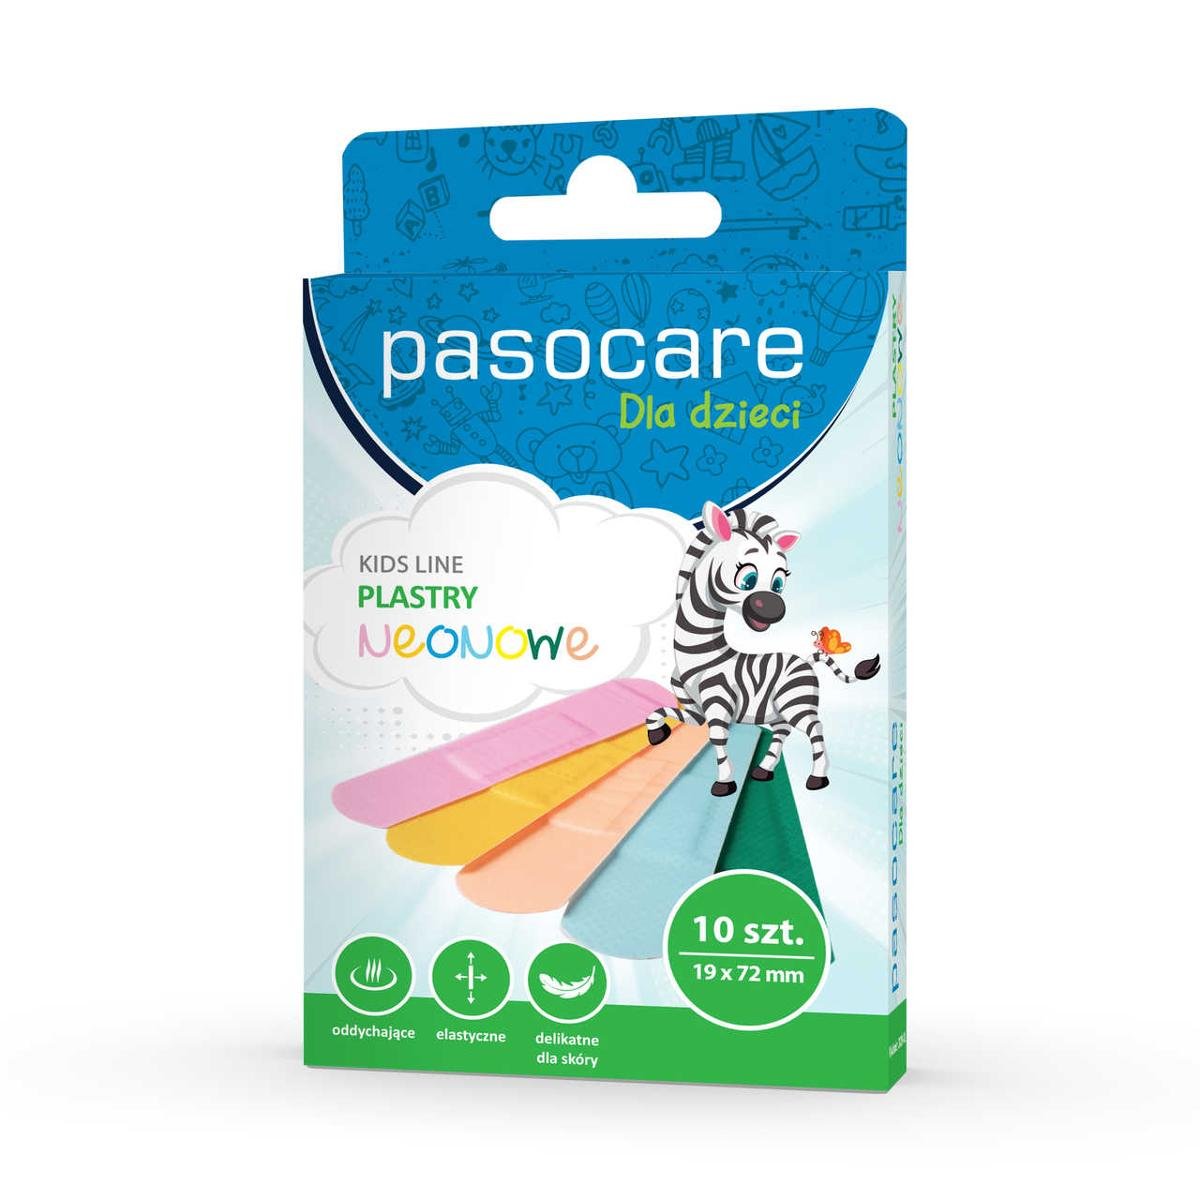 Paso Plastry pasocare kids line neonowe x 10 szt